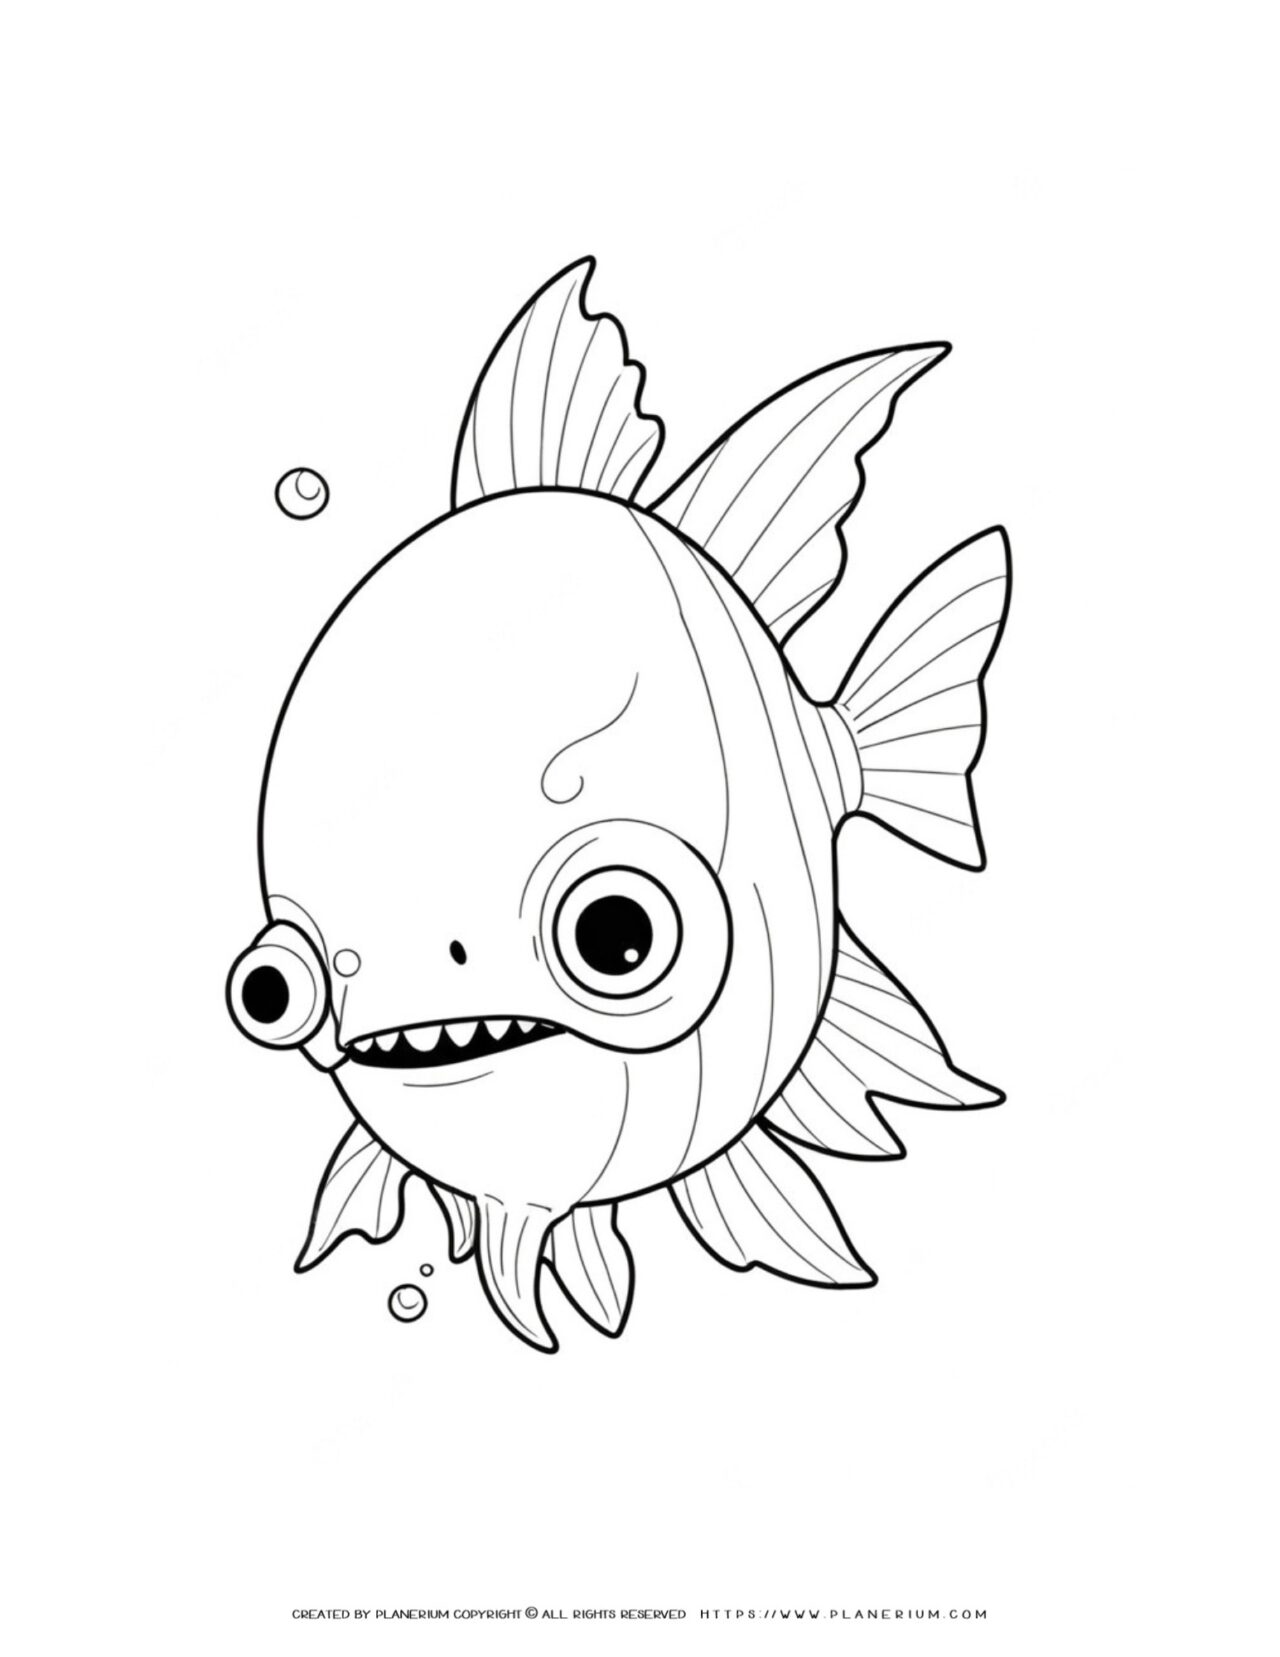 Cartoon-fish-coloring-page-illustration